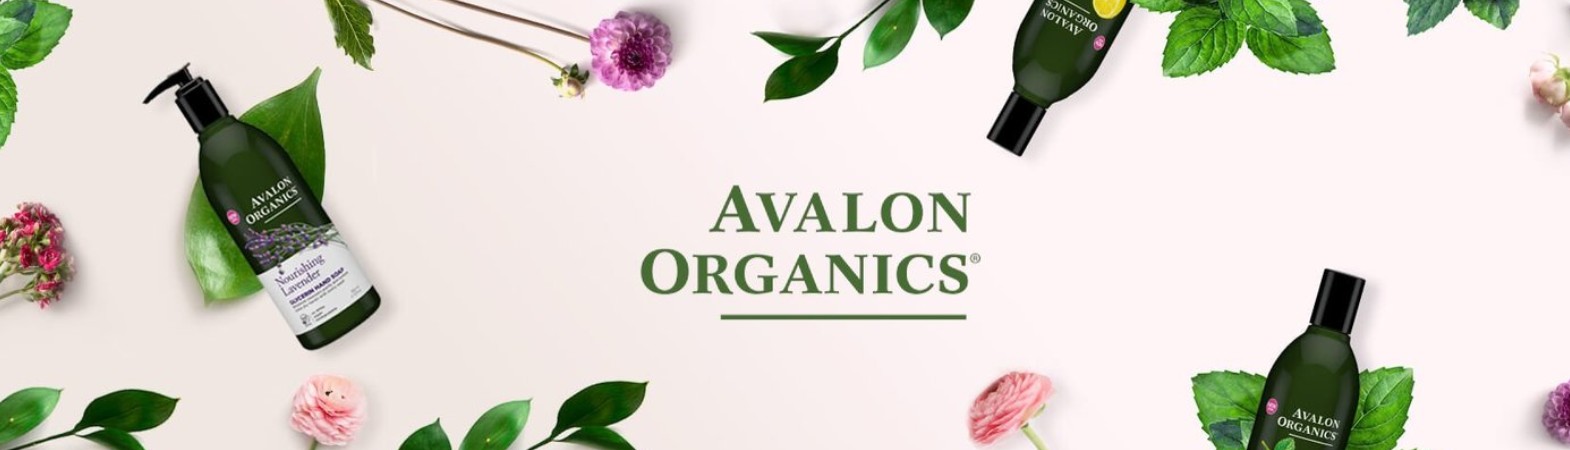 Avalon Organics - BODY